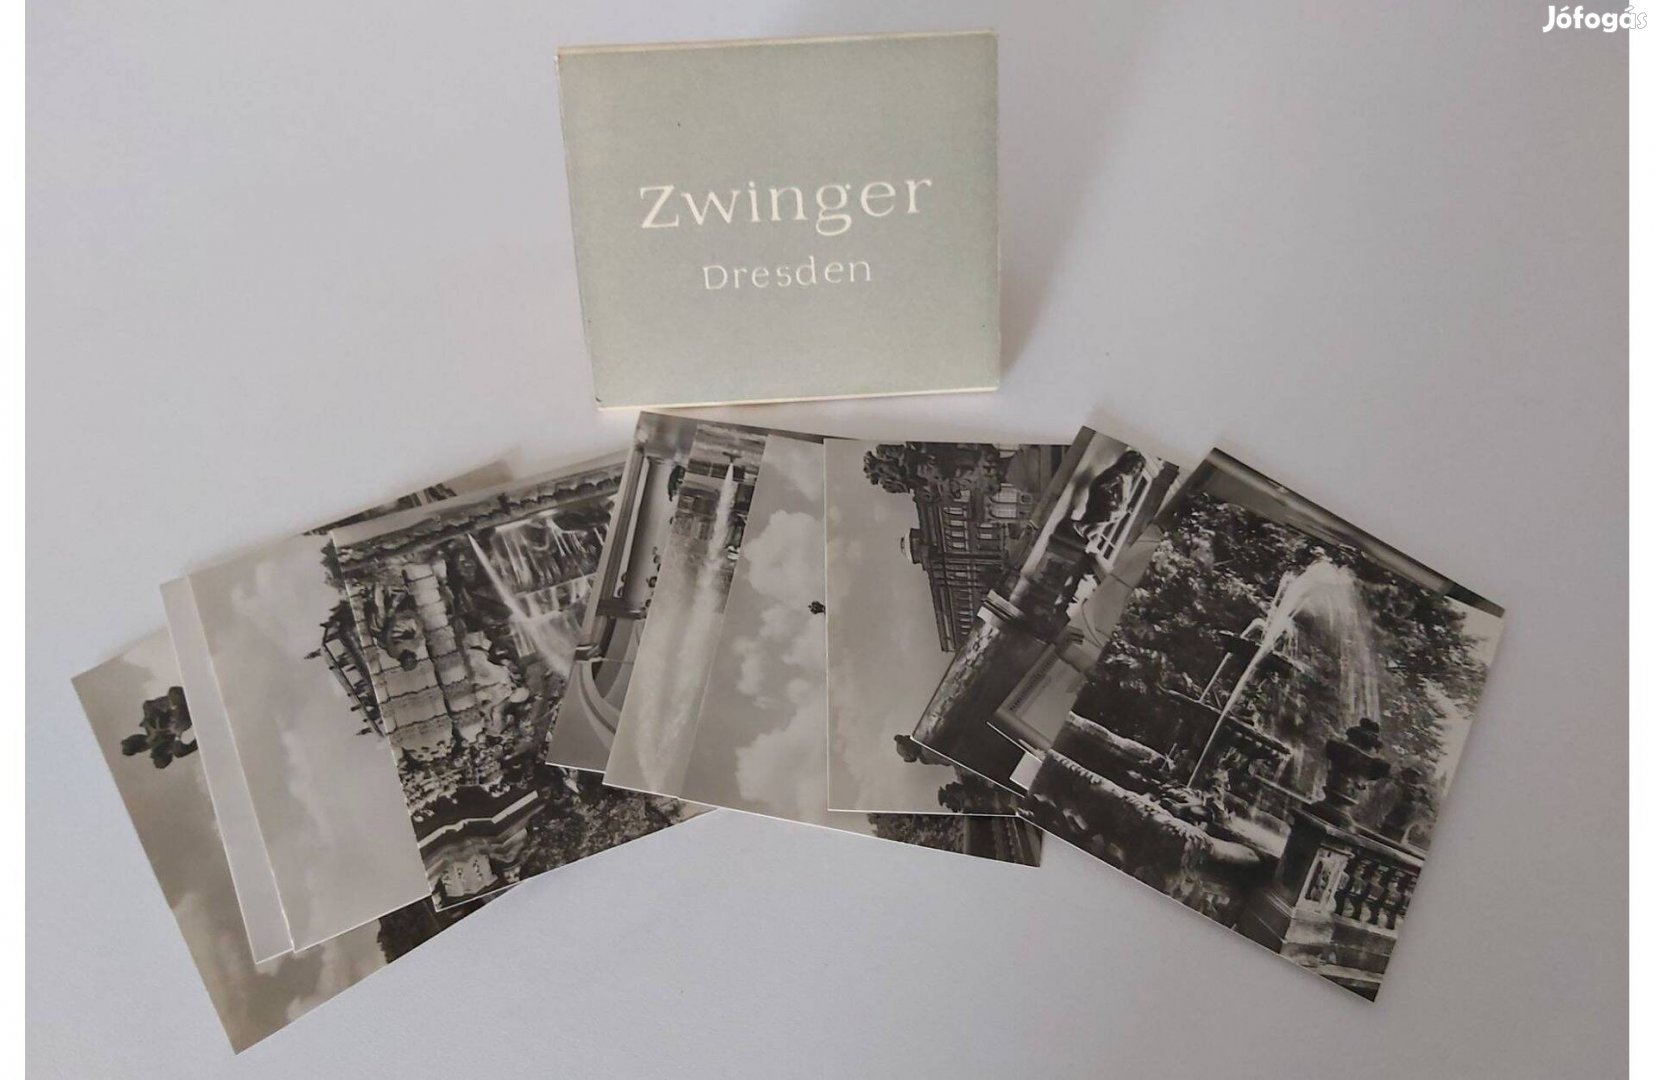 Zwinger Dresden képeslapok albumban